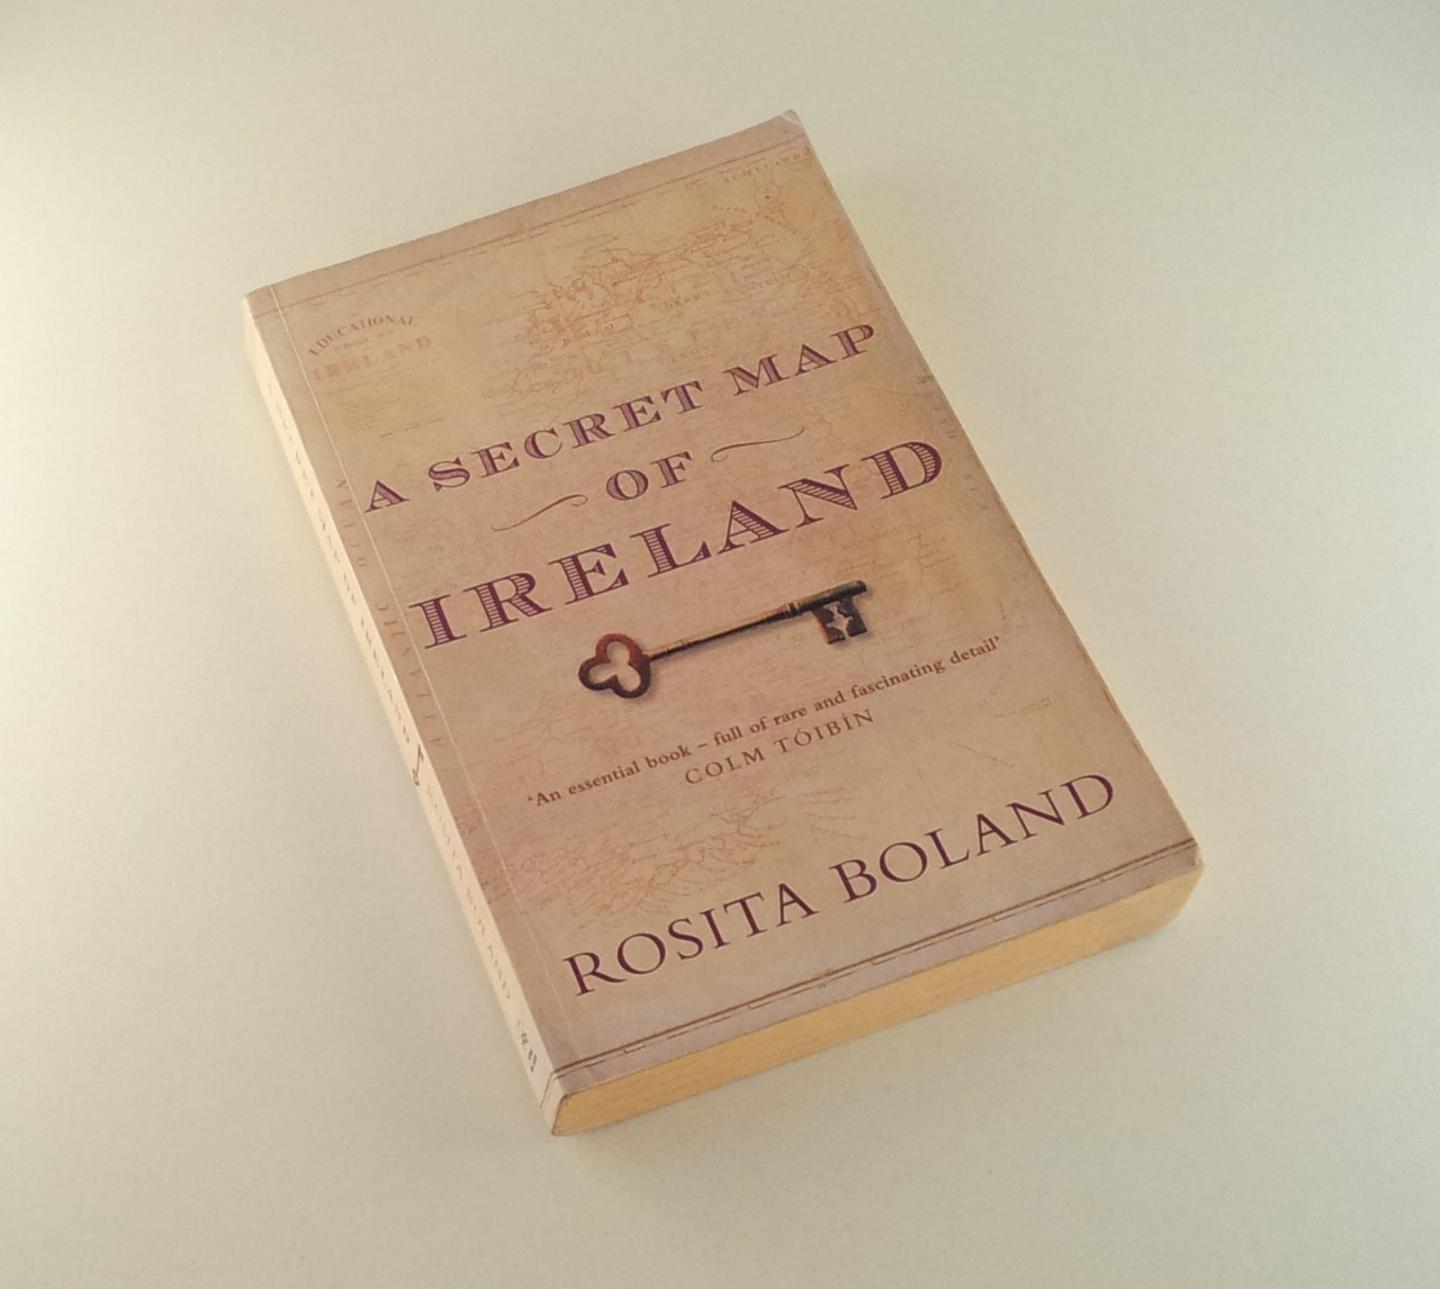 Boland, Rosita - A secret map of Ireland